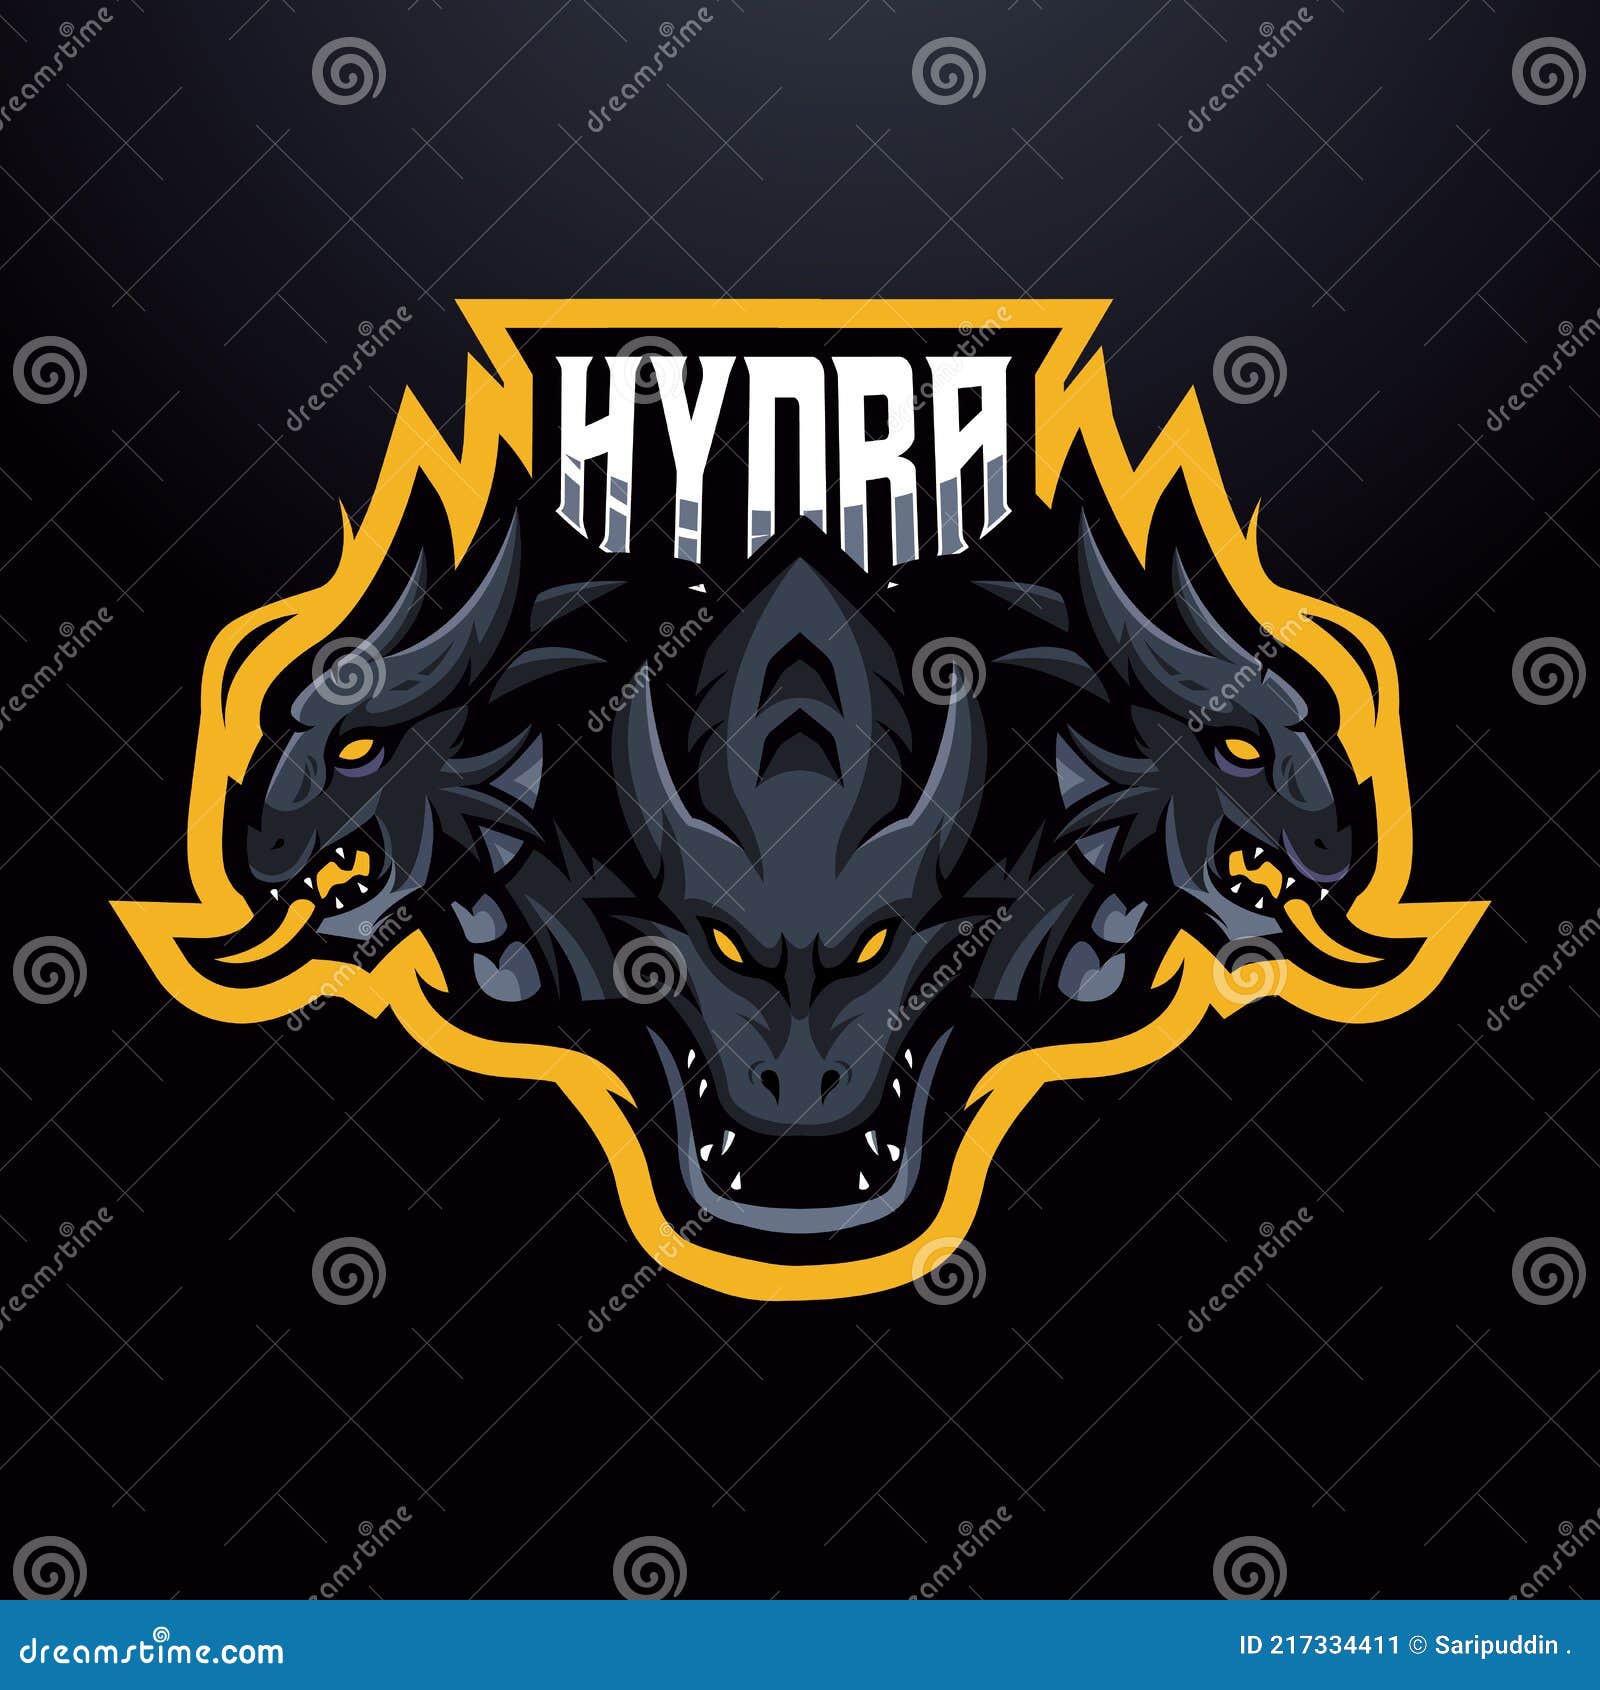 Hydra  Graphic design lessons, Logo design art, Hydra